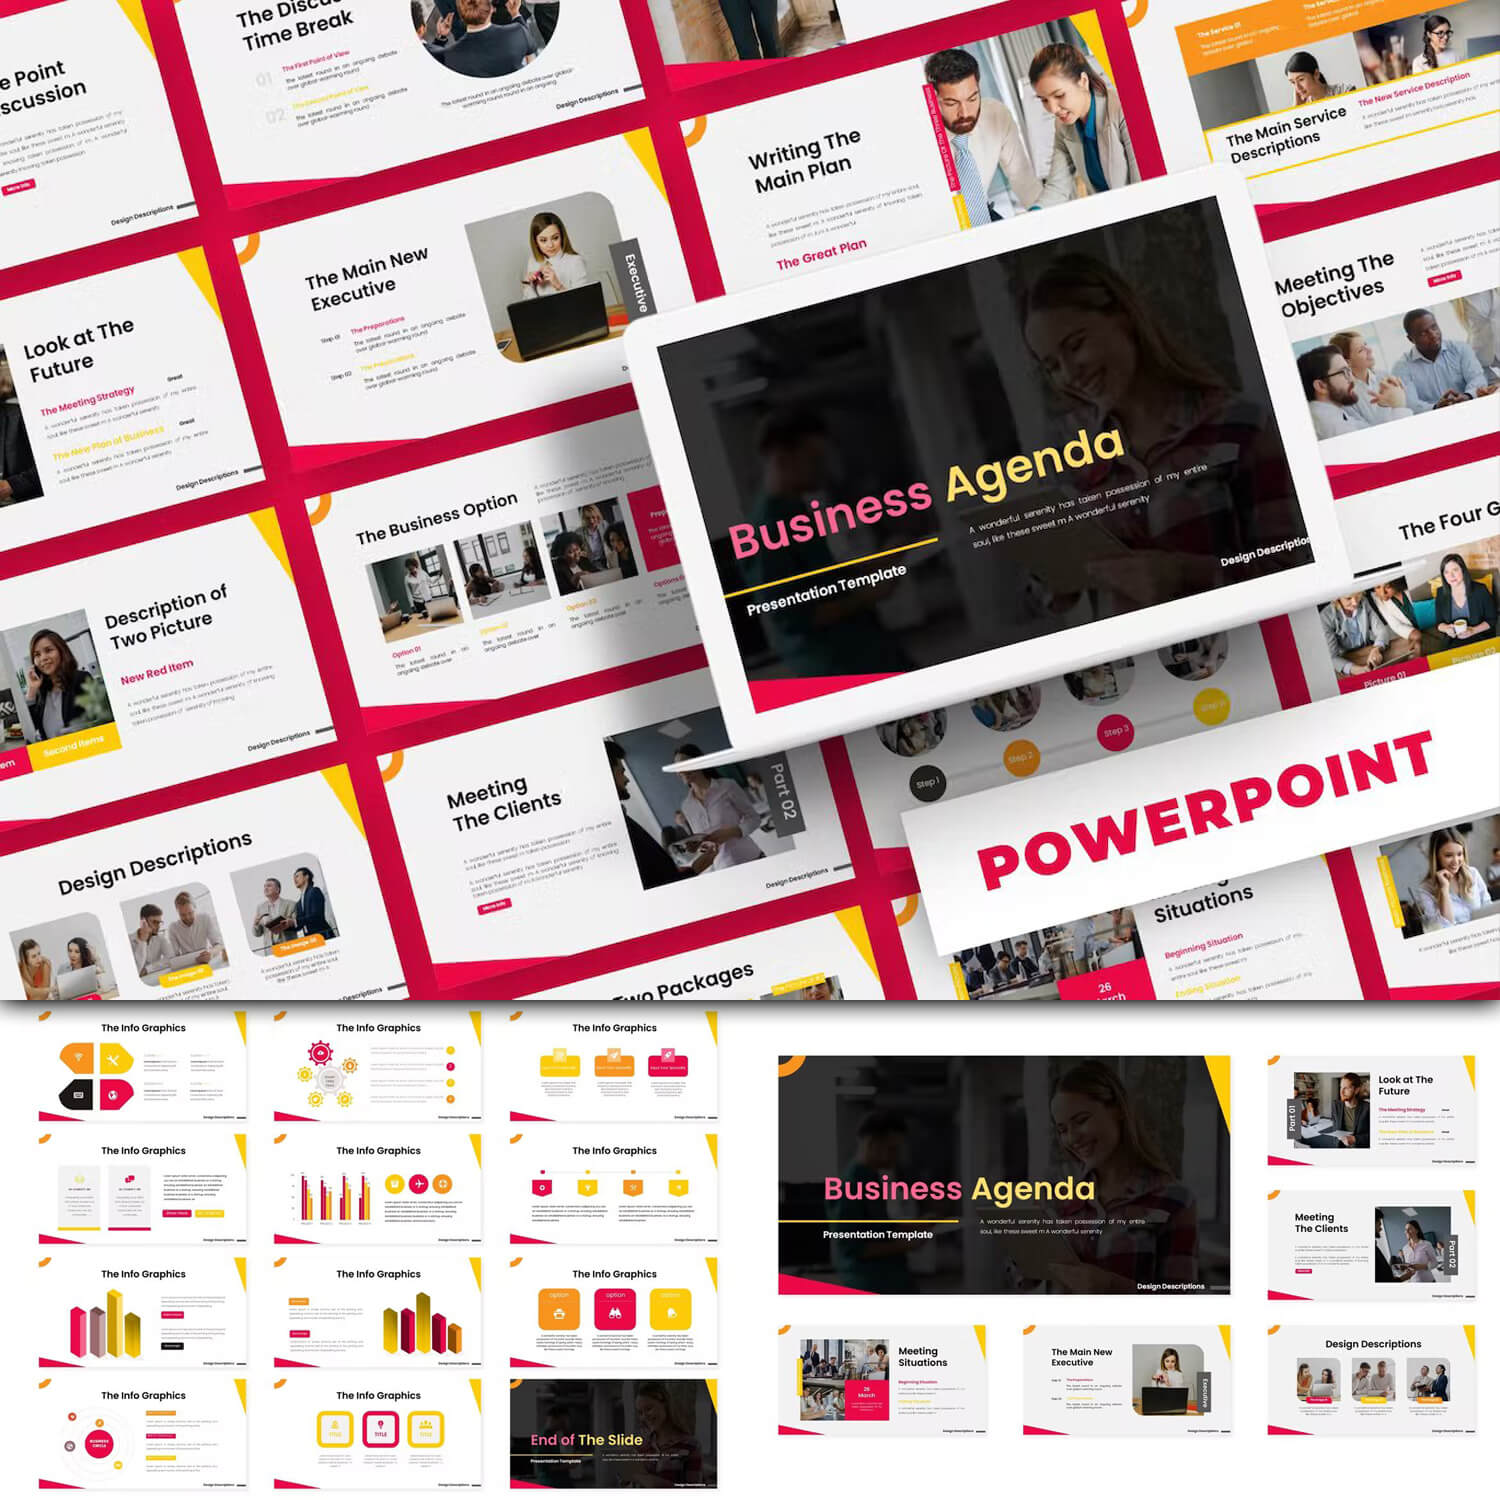 Business Agenda - Powerpoint Template.